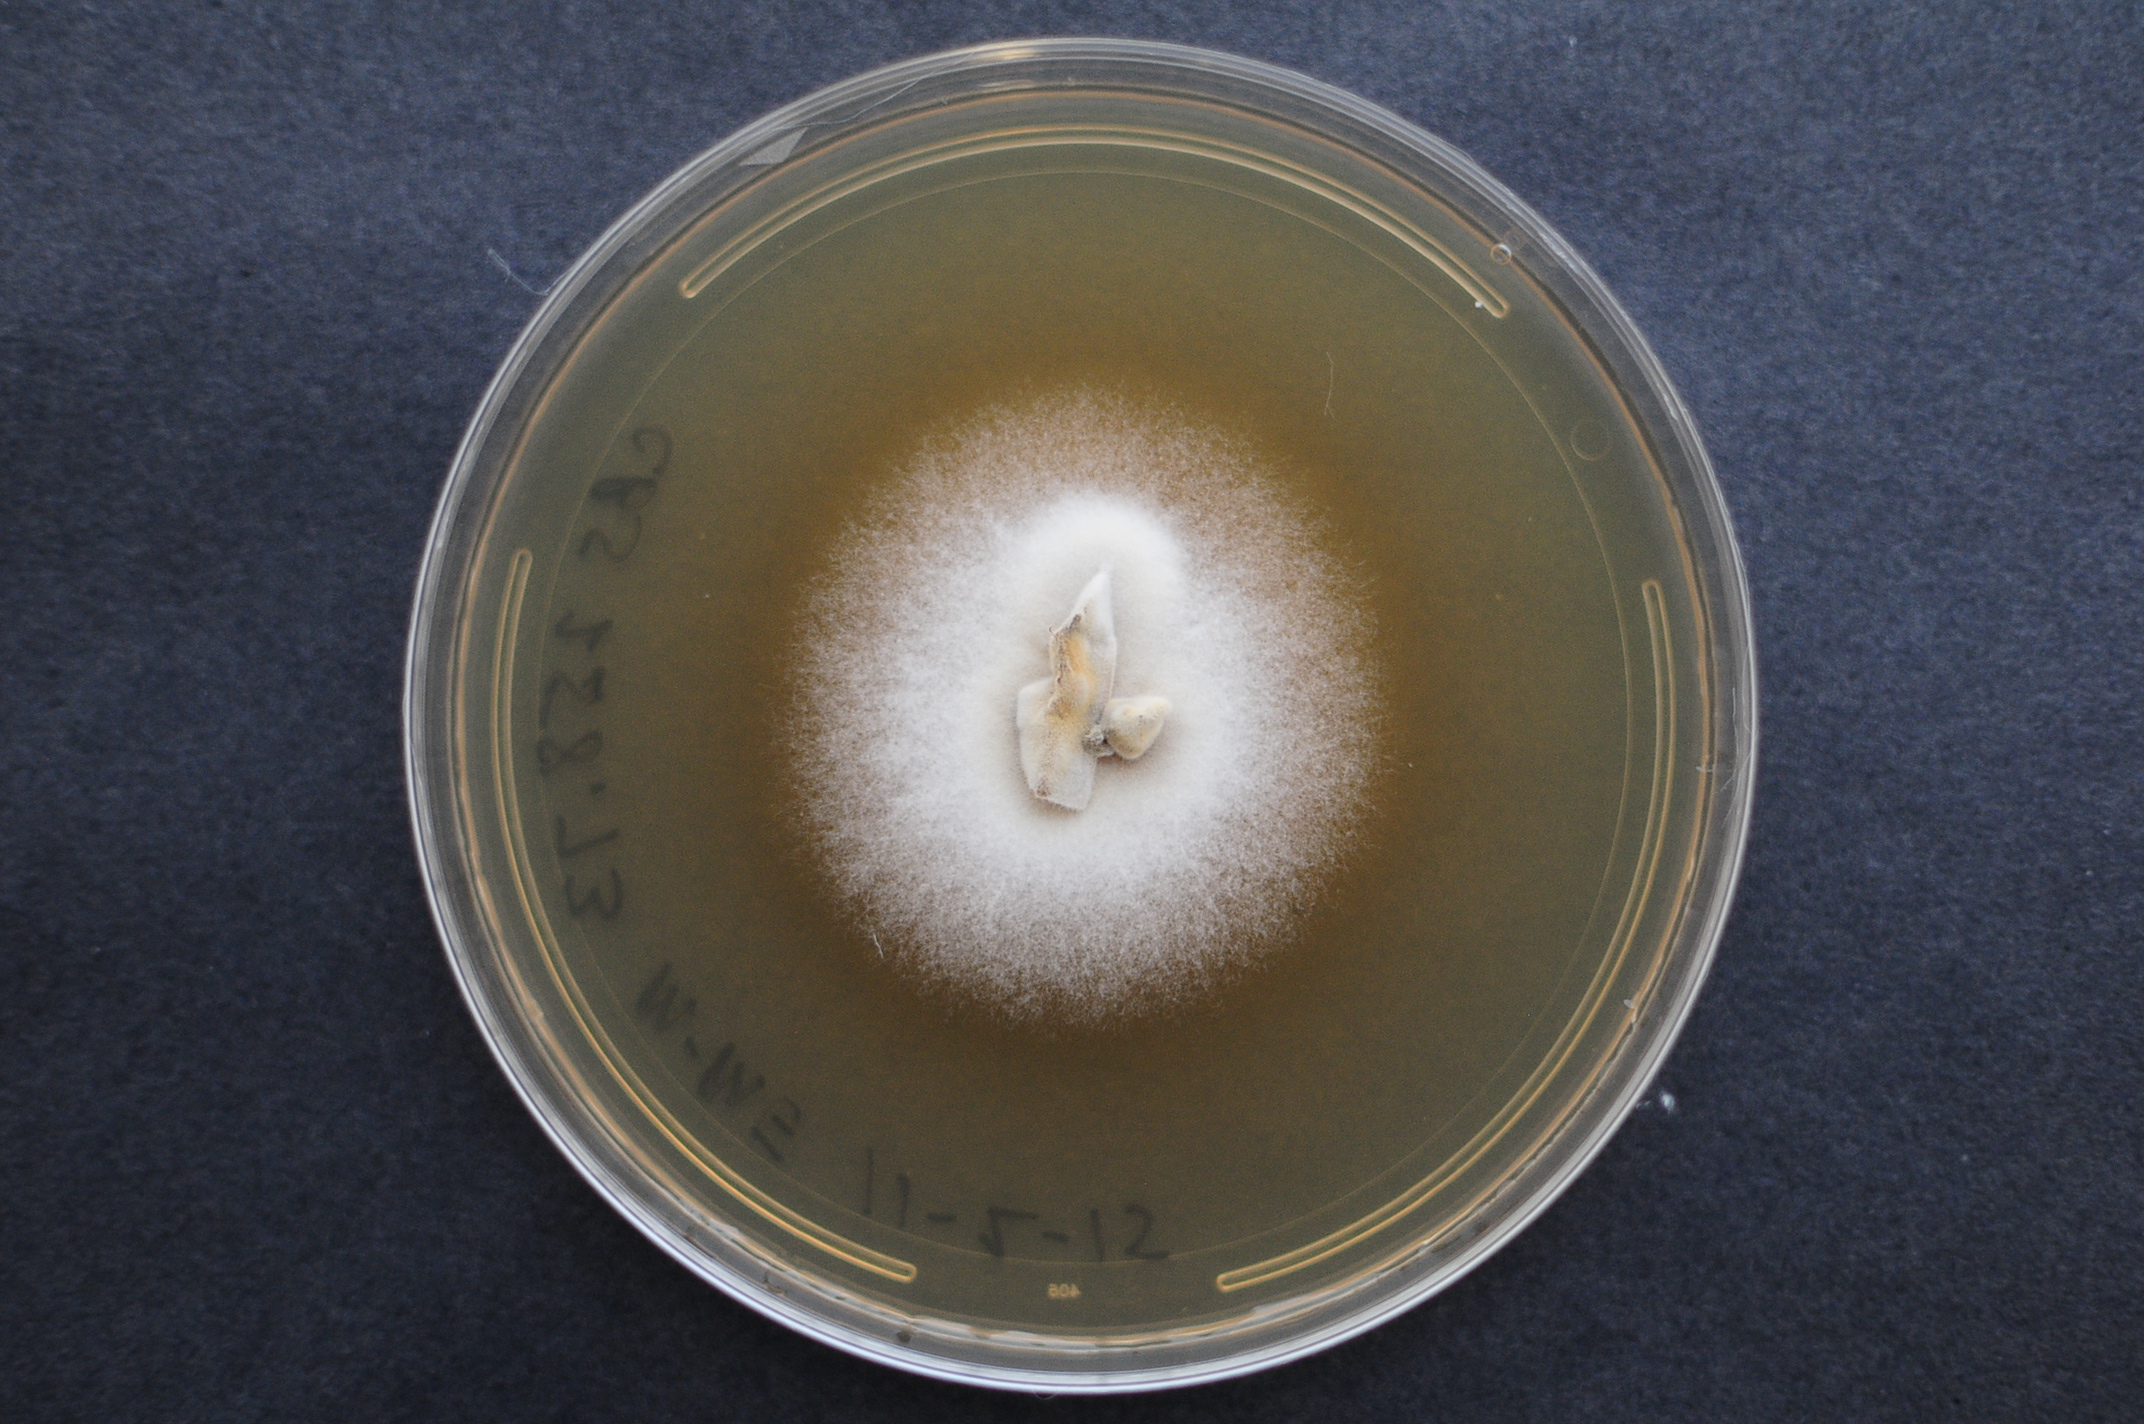 Laxitextum bicolor CBS 258.73 growing in the lab [Photo credit: Jon Karl Magnuson]